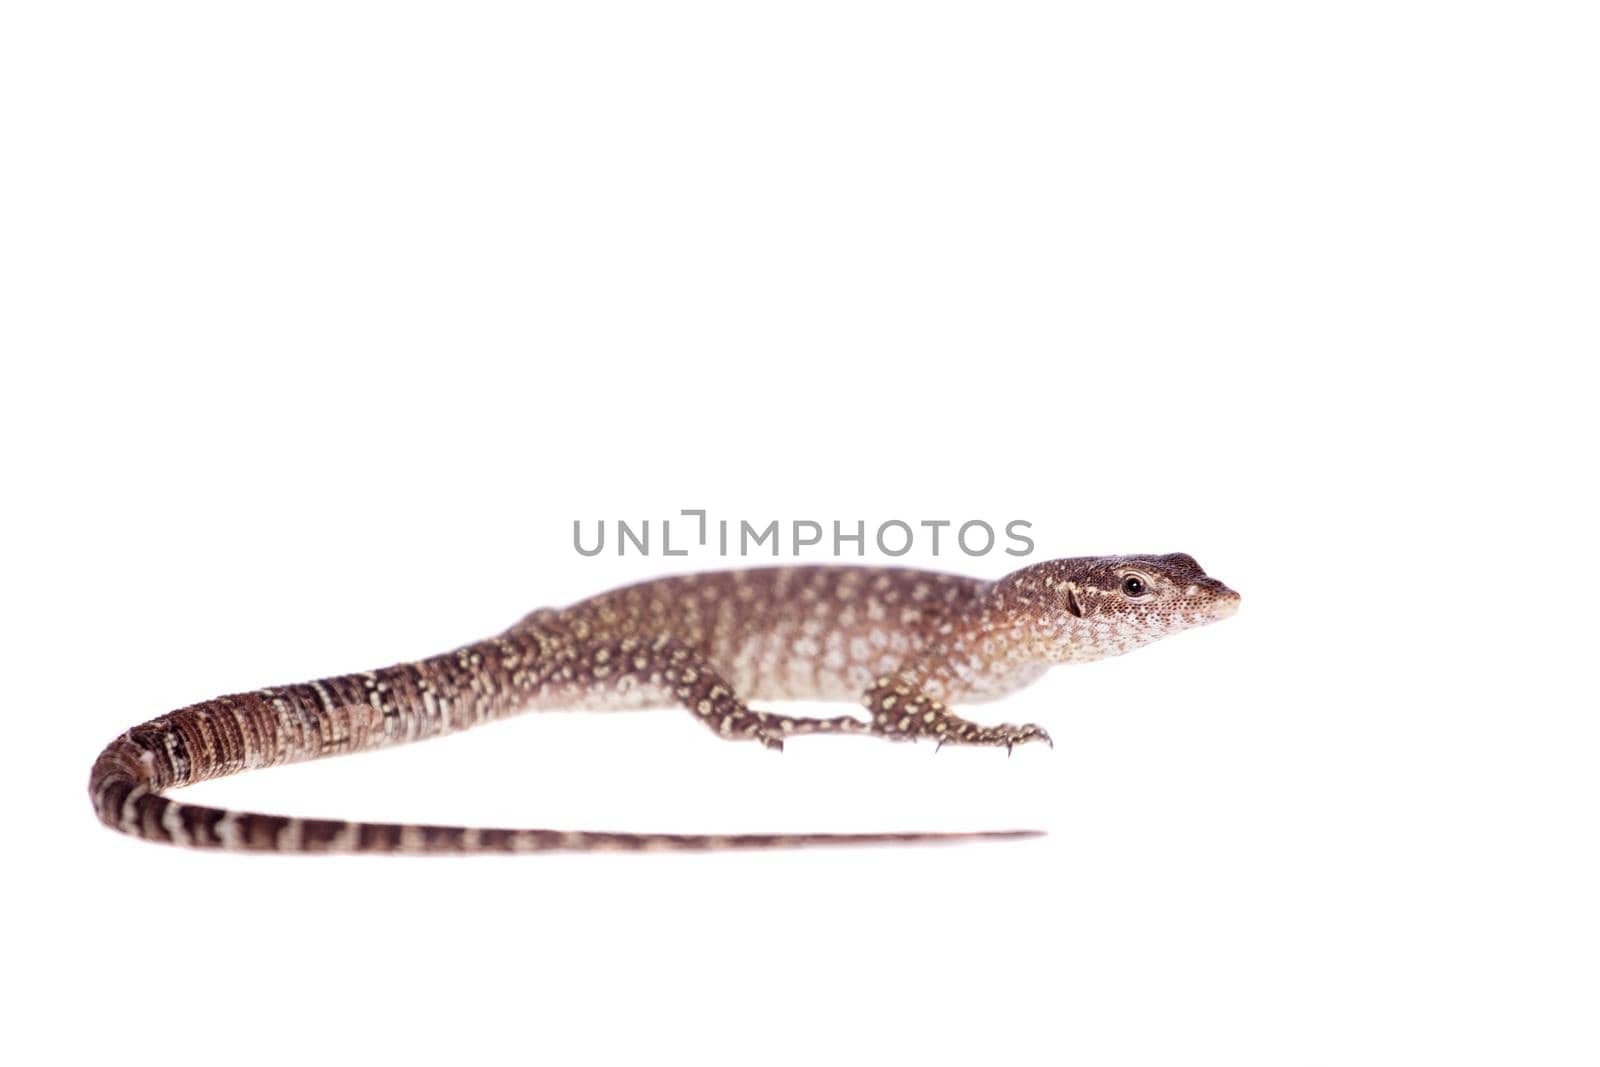 Asian Water Monitor Lizard, Varanus salvator, on white by RosaJay